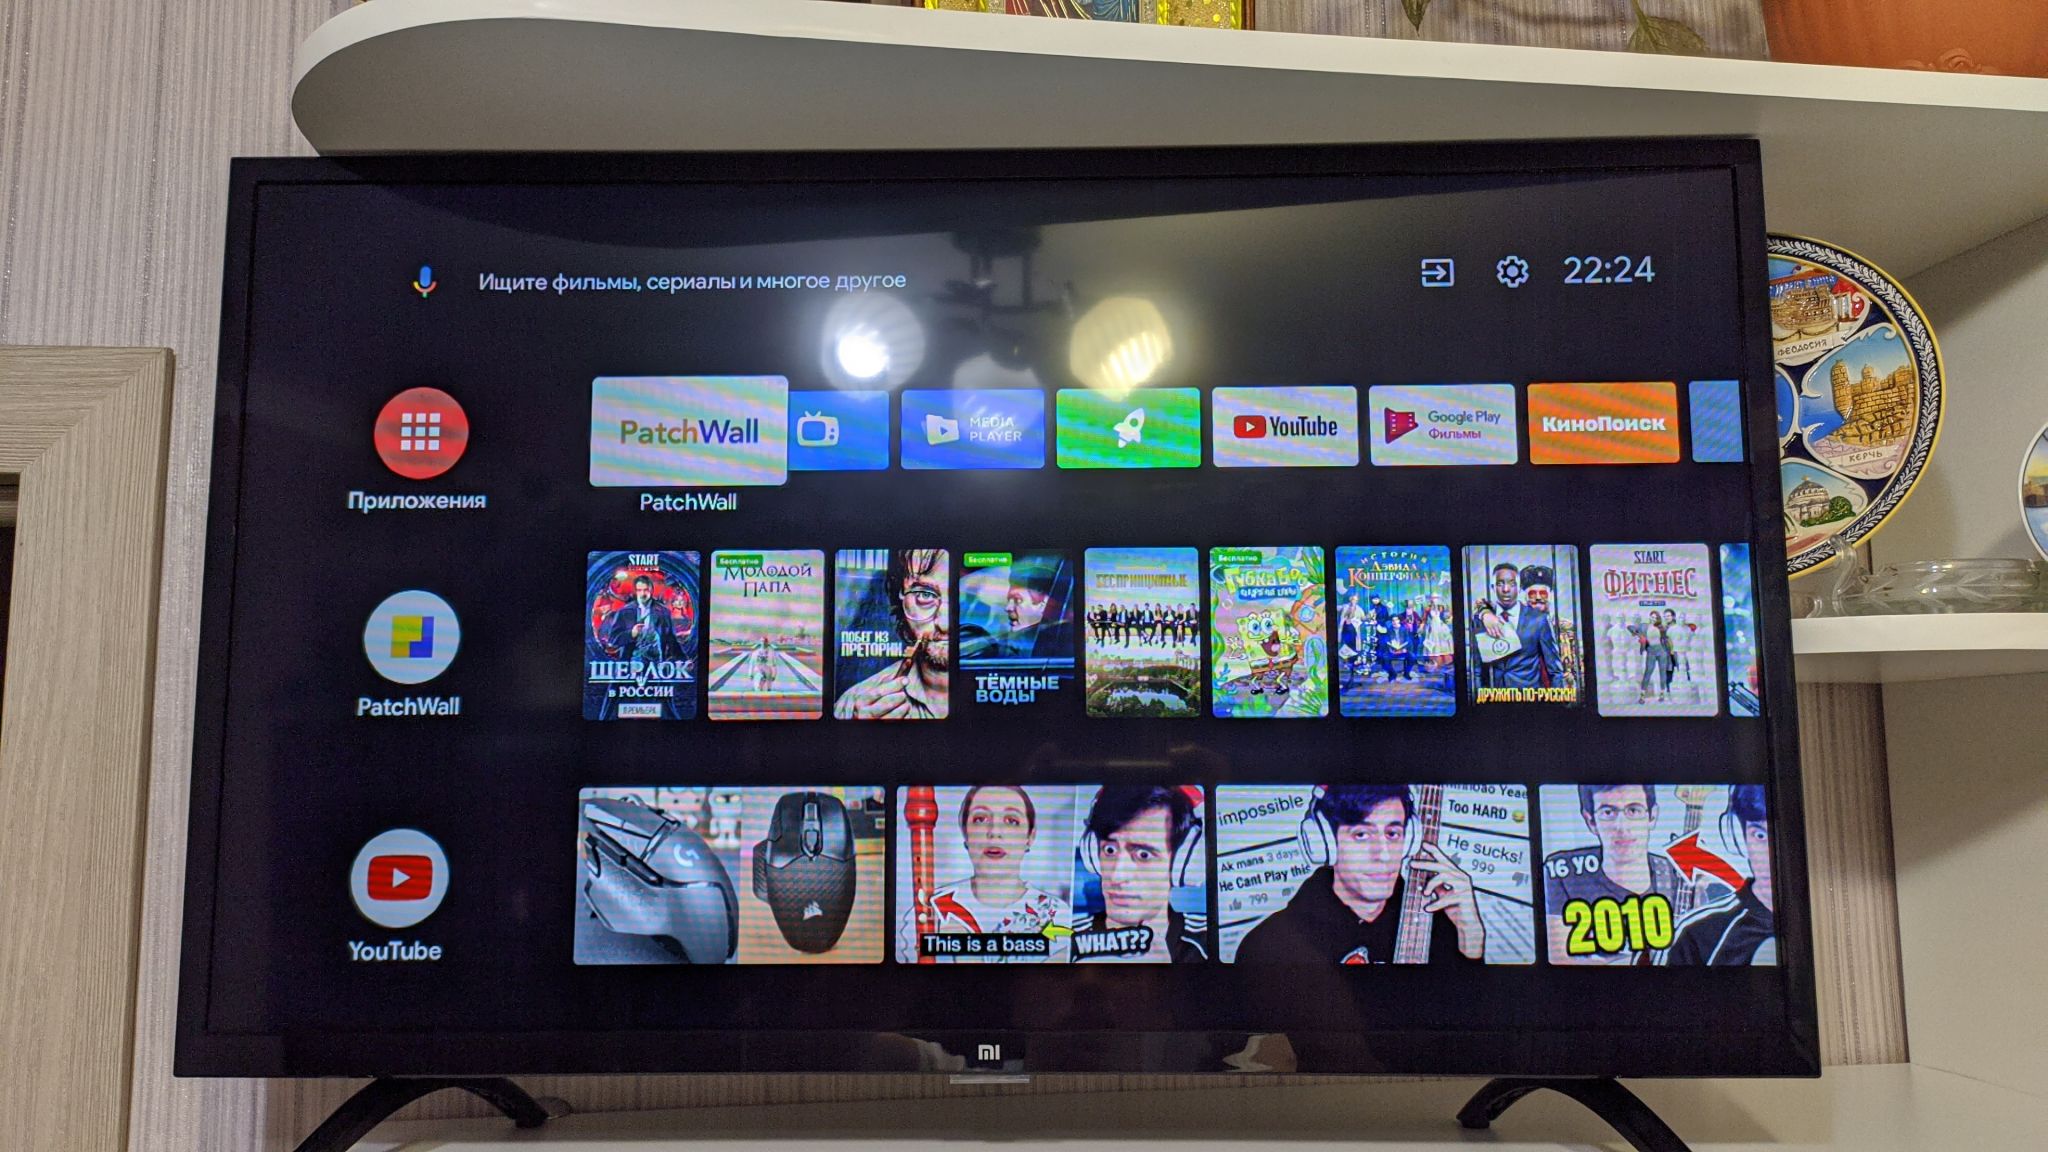 Xiaomi Mi Tv Ea32 2022 32